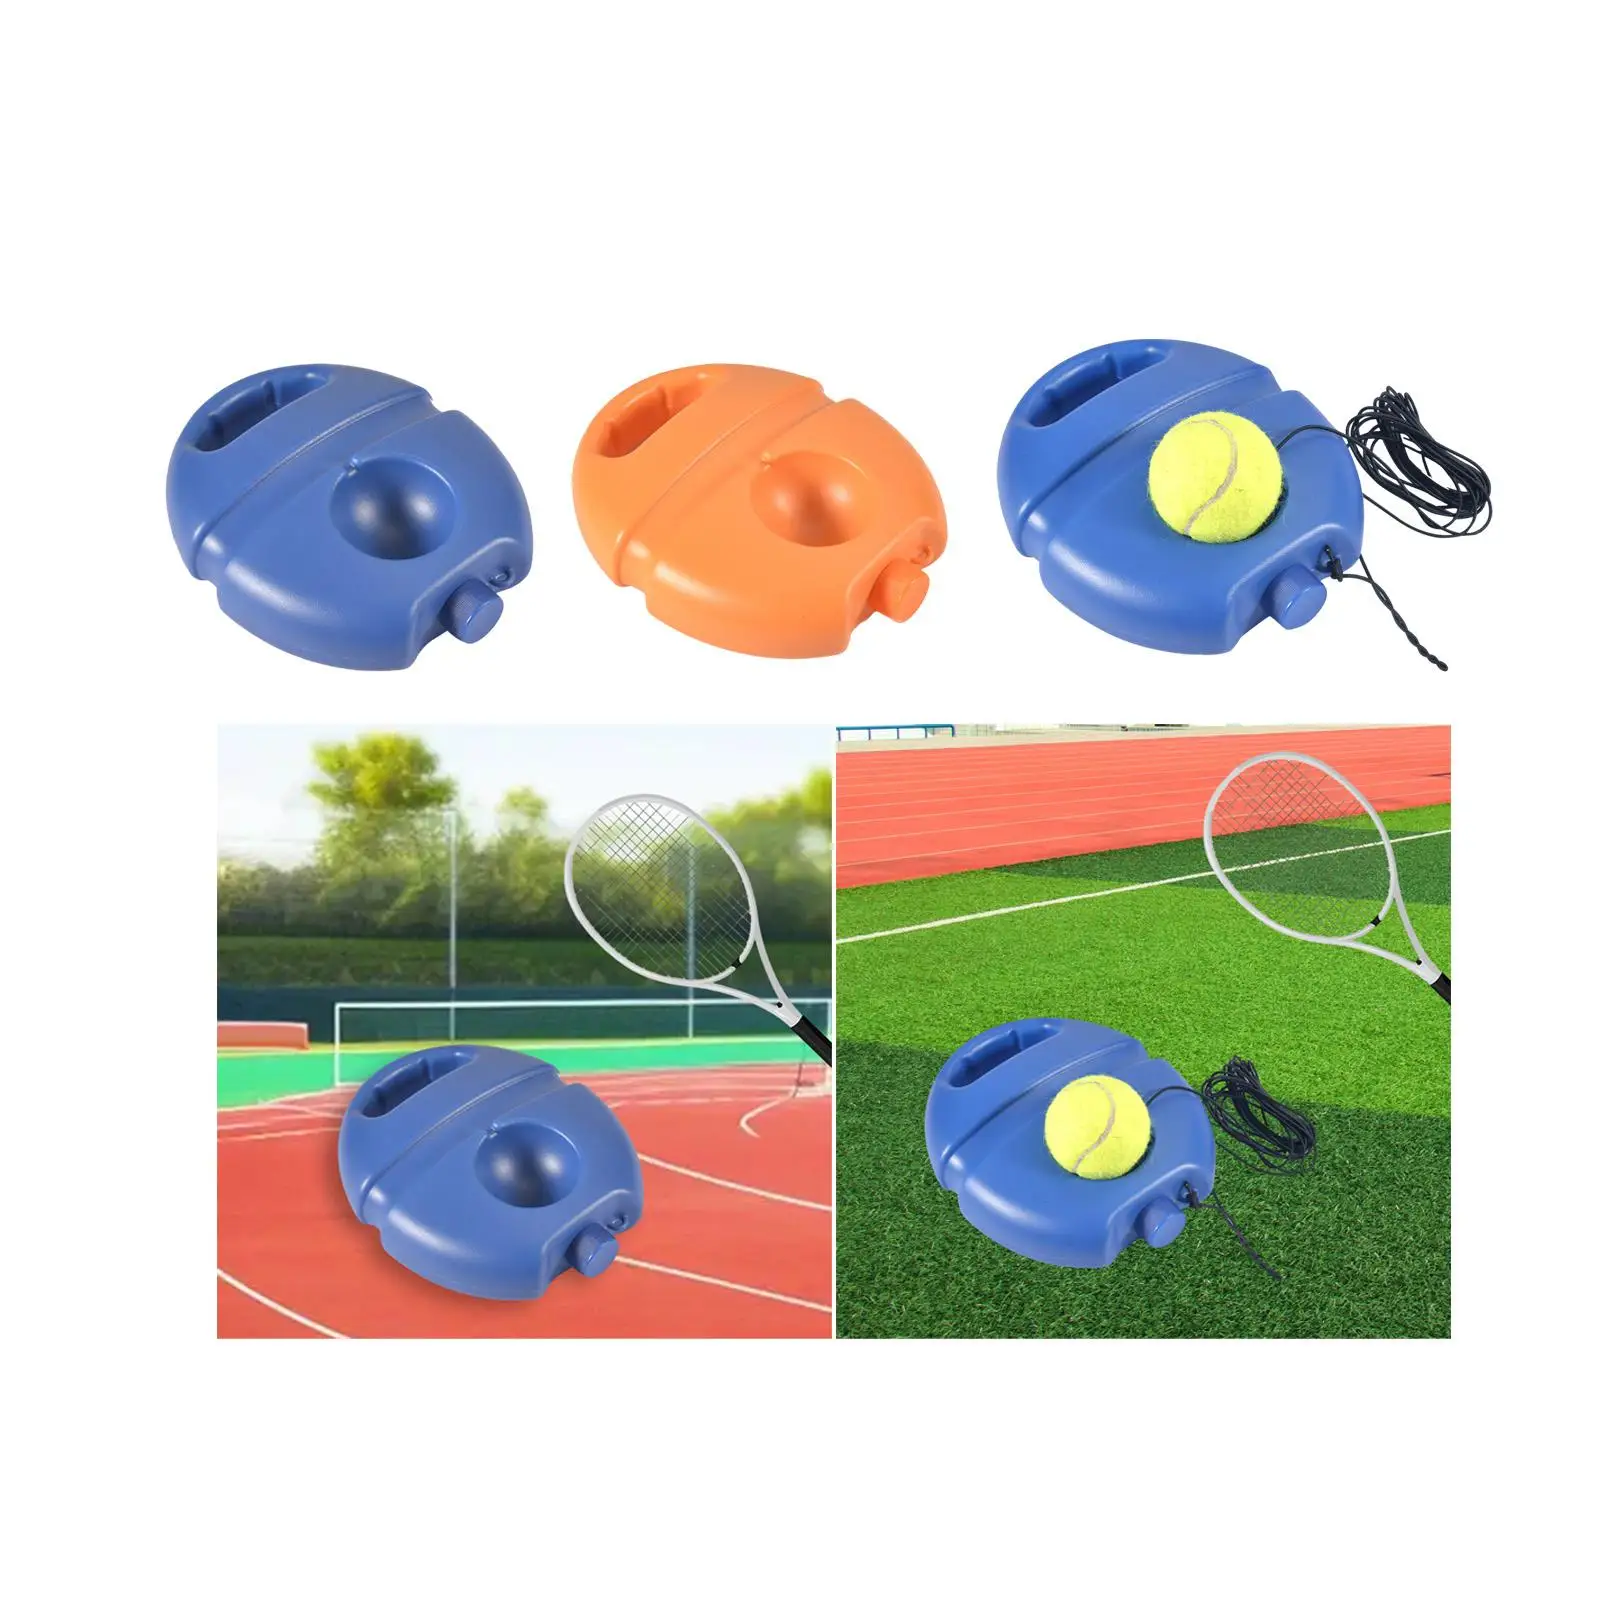 Tennis Trainer Base Pickleball Trainer Base Portable Tennis Training Aid, Single Player Tennis Trainer Accessories